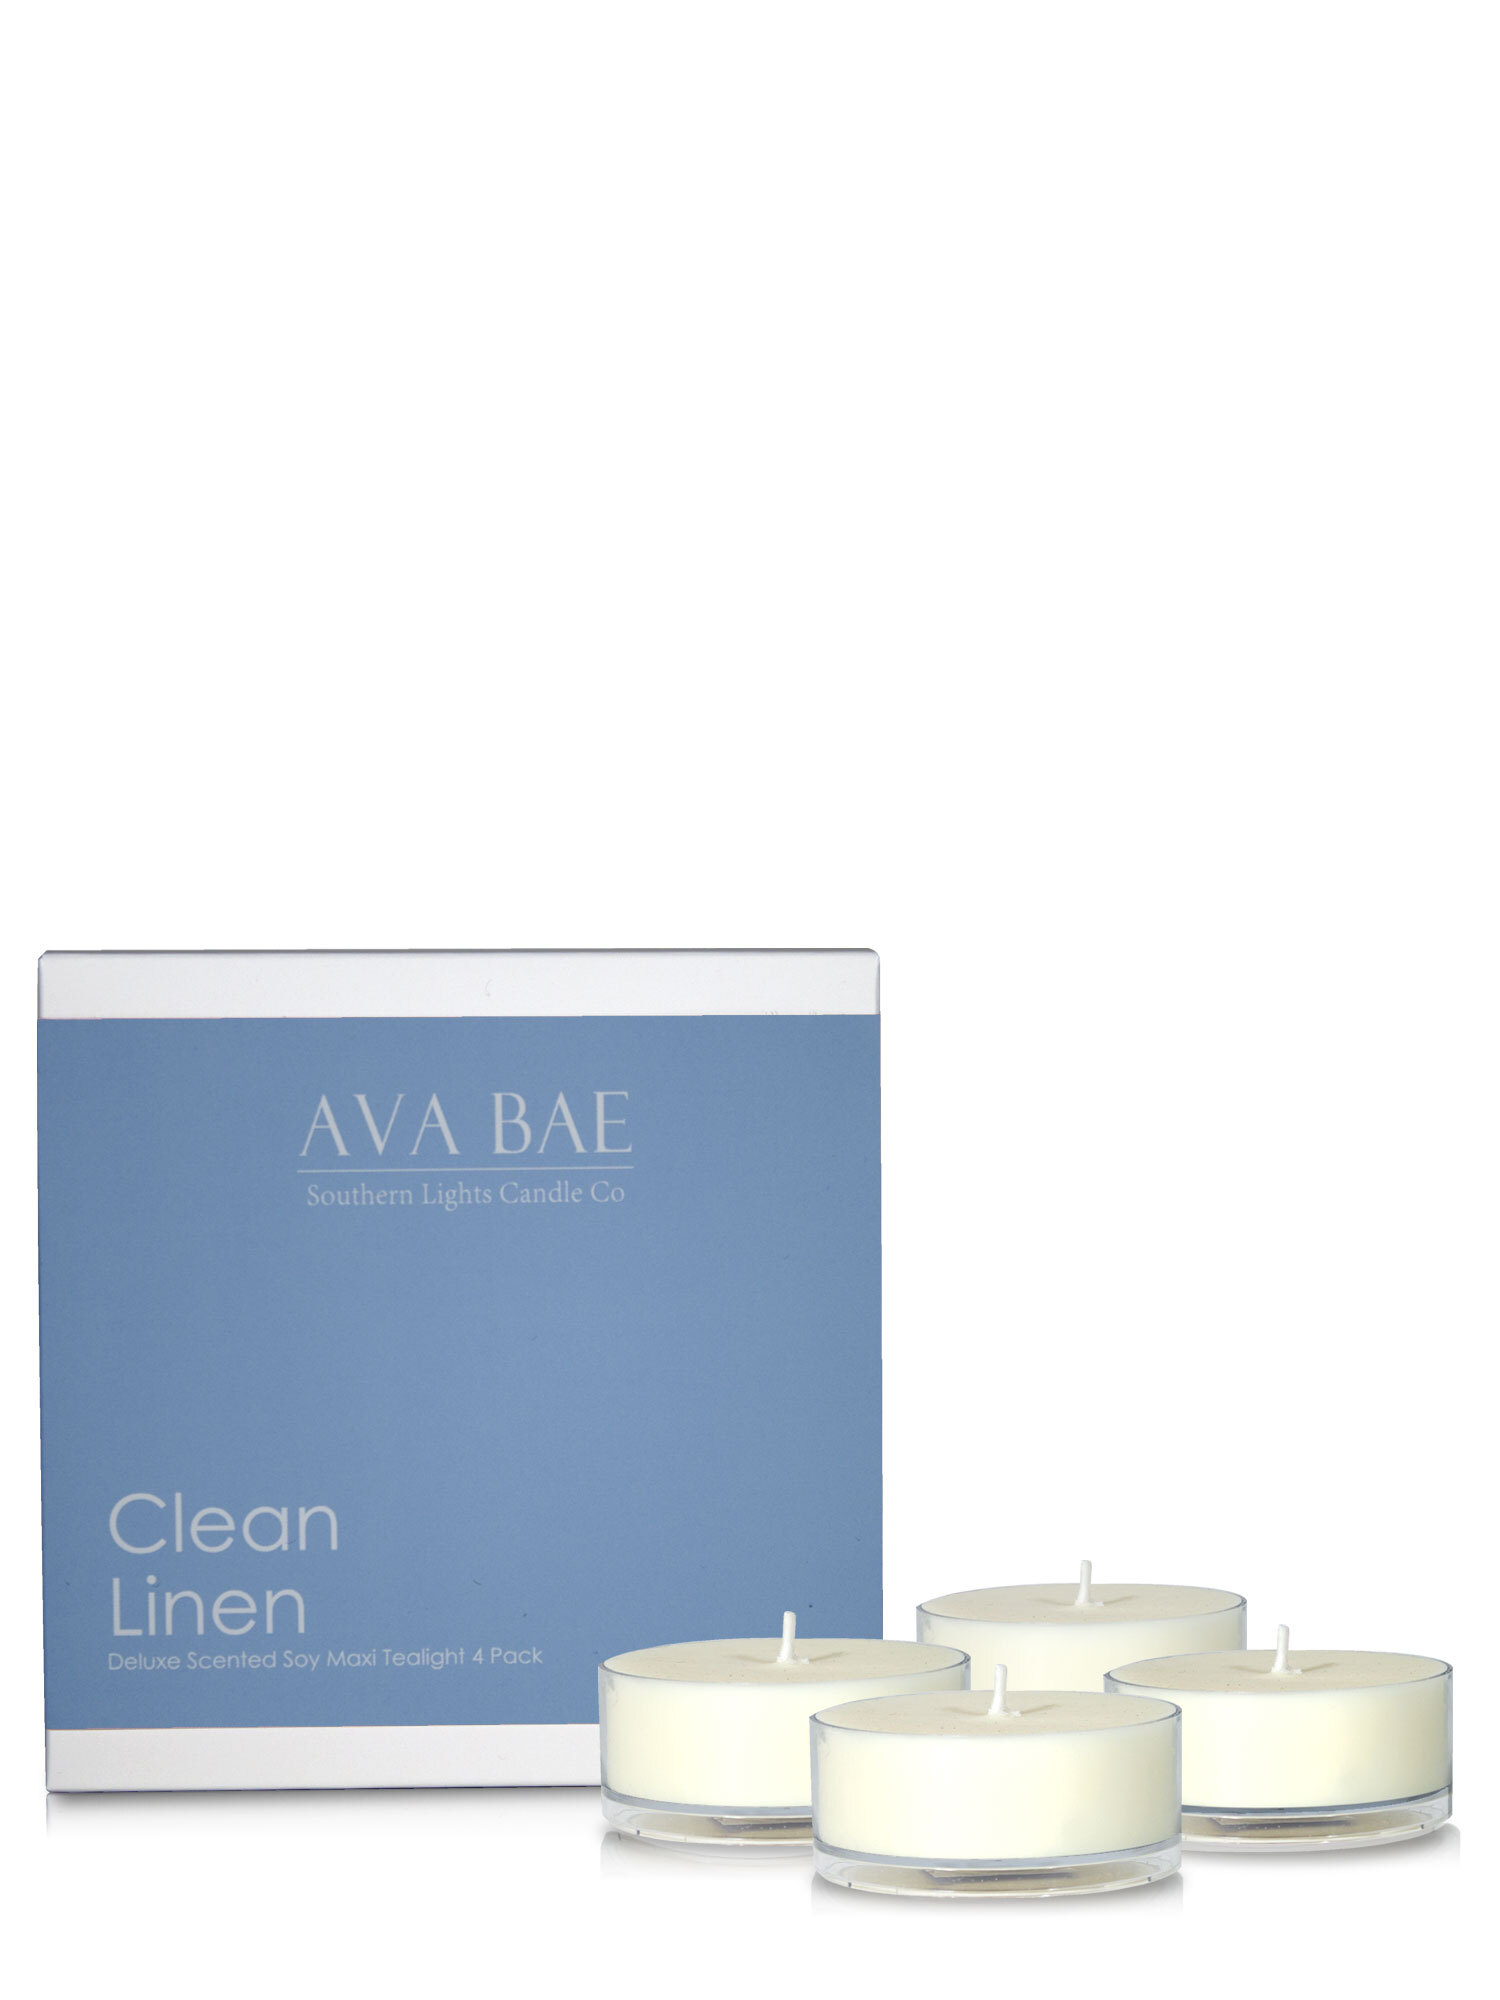 Ava Bae Soy Maxi Tealight Pack - Clean Linen